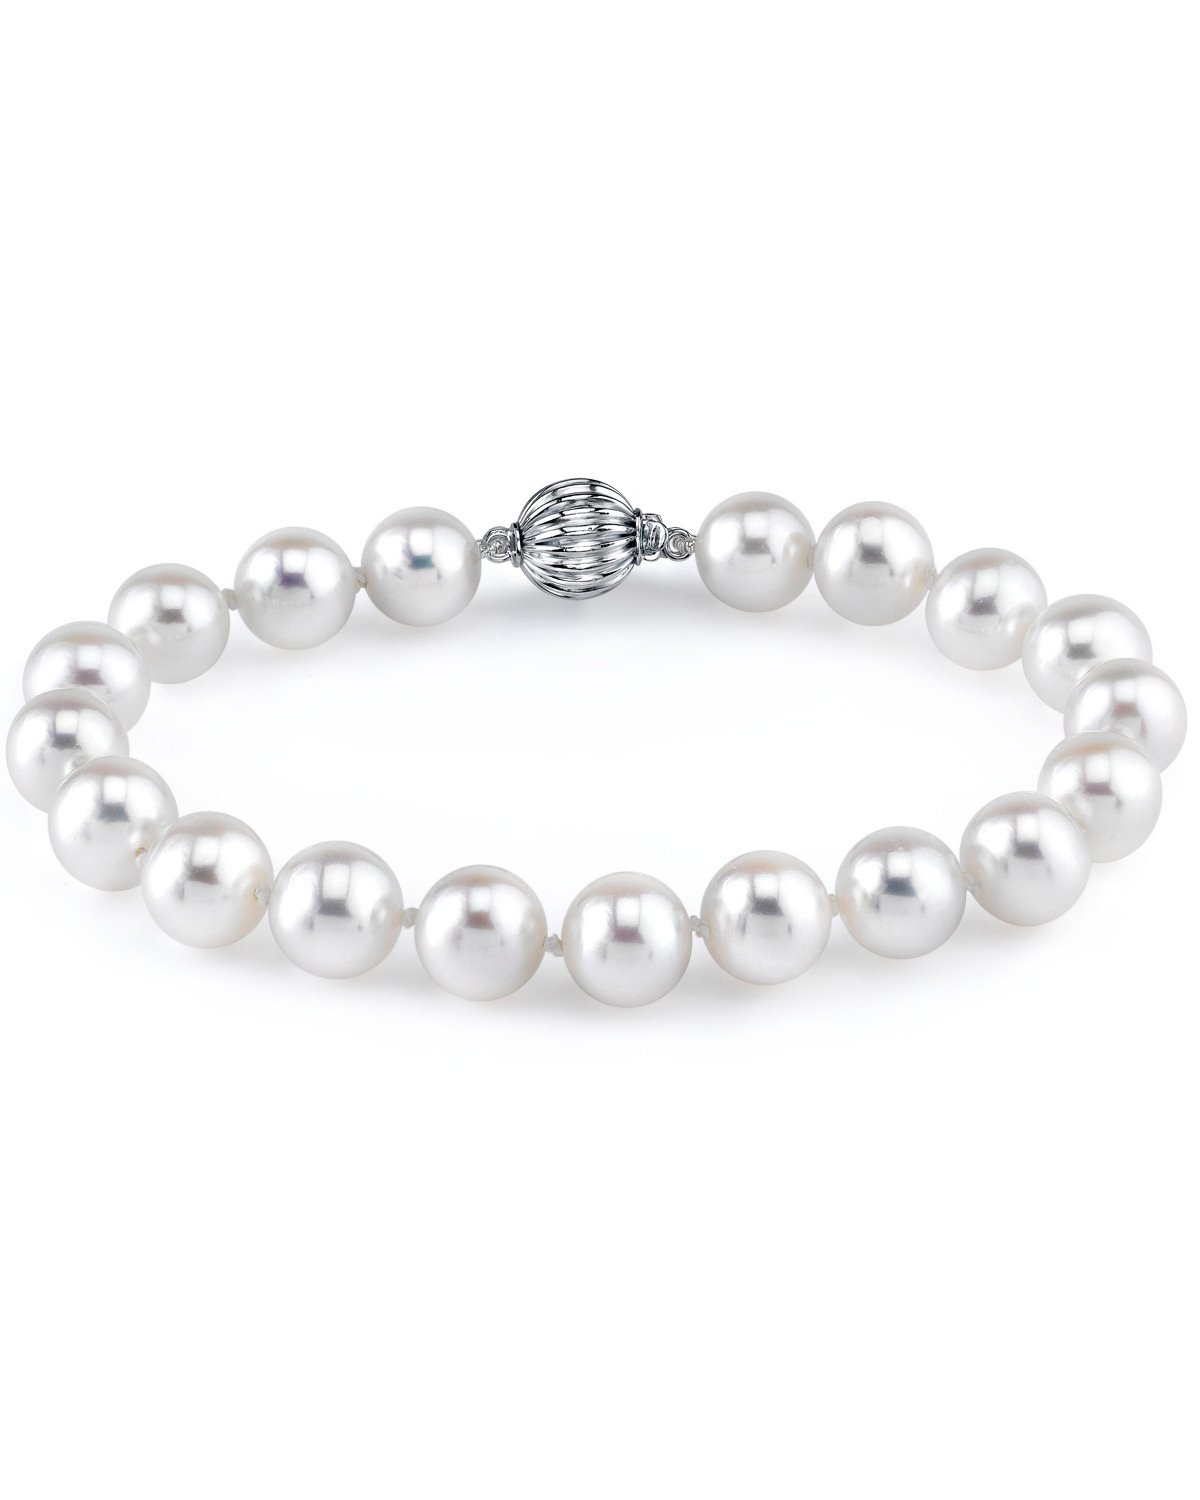 7.0-7.5mm White Freshwater Pearl Bracelet - AAAA Quality